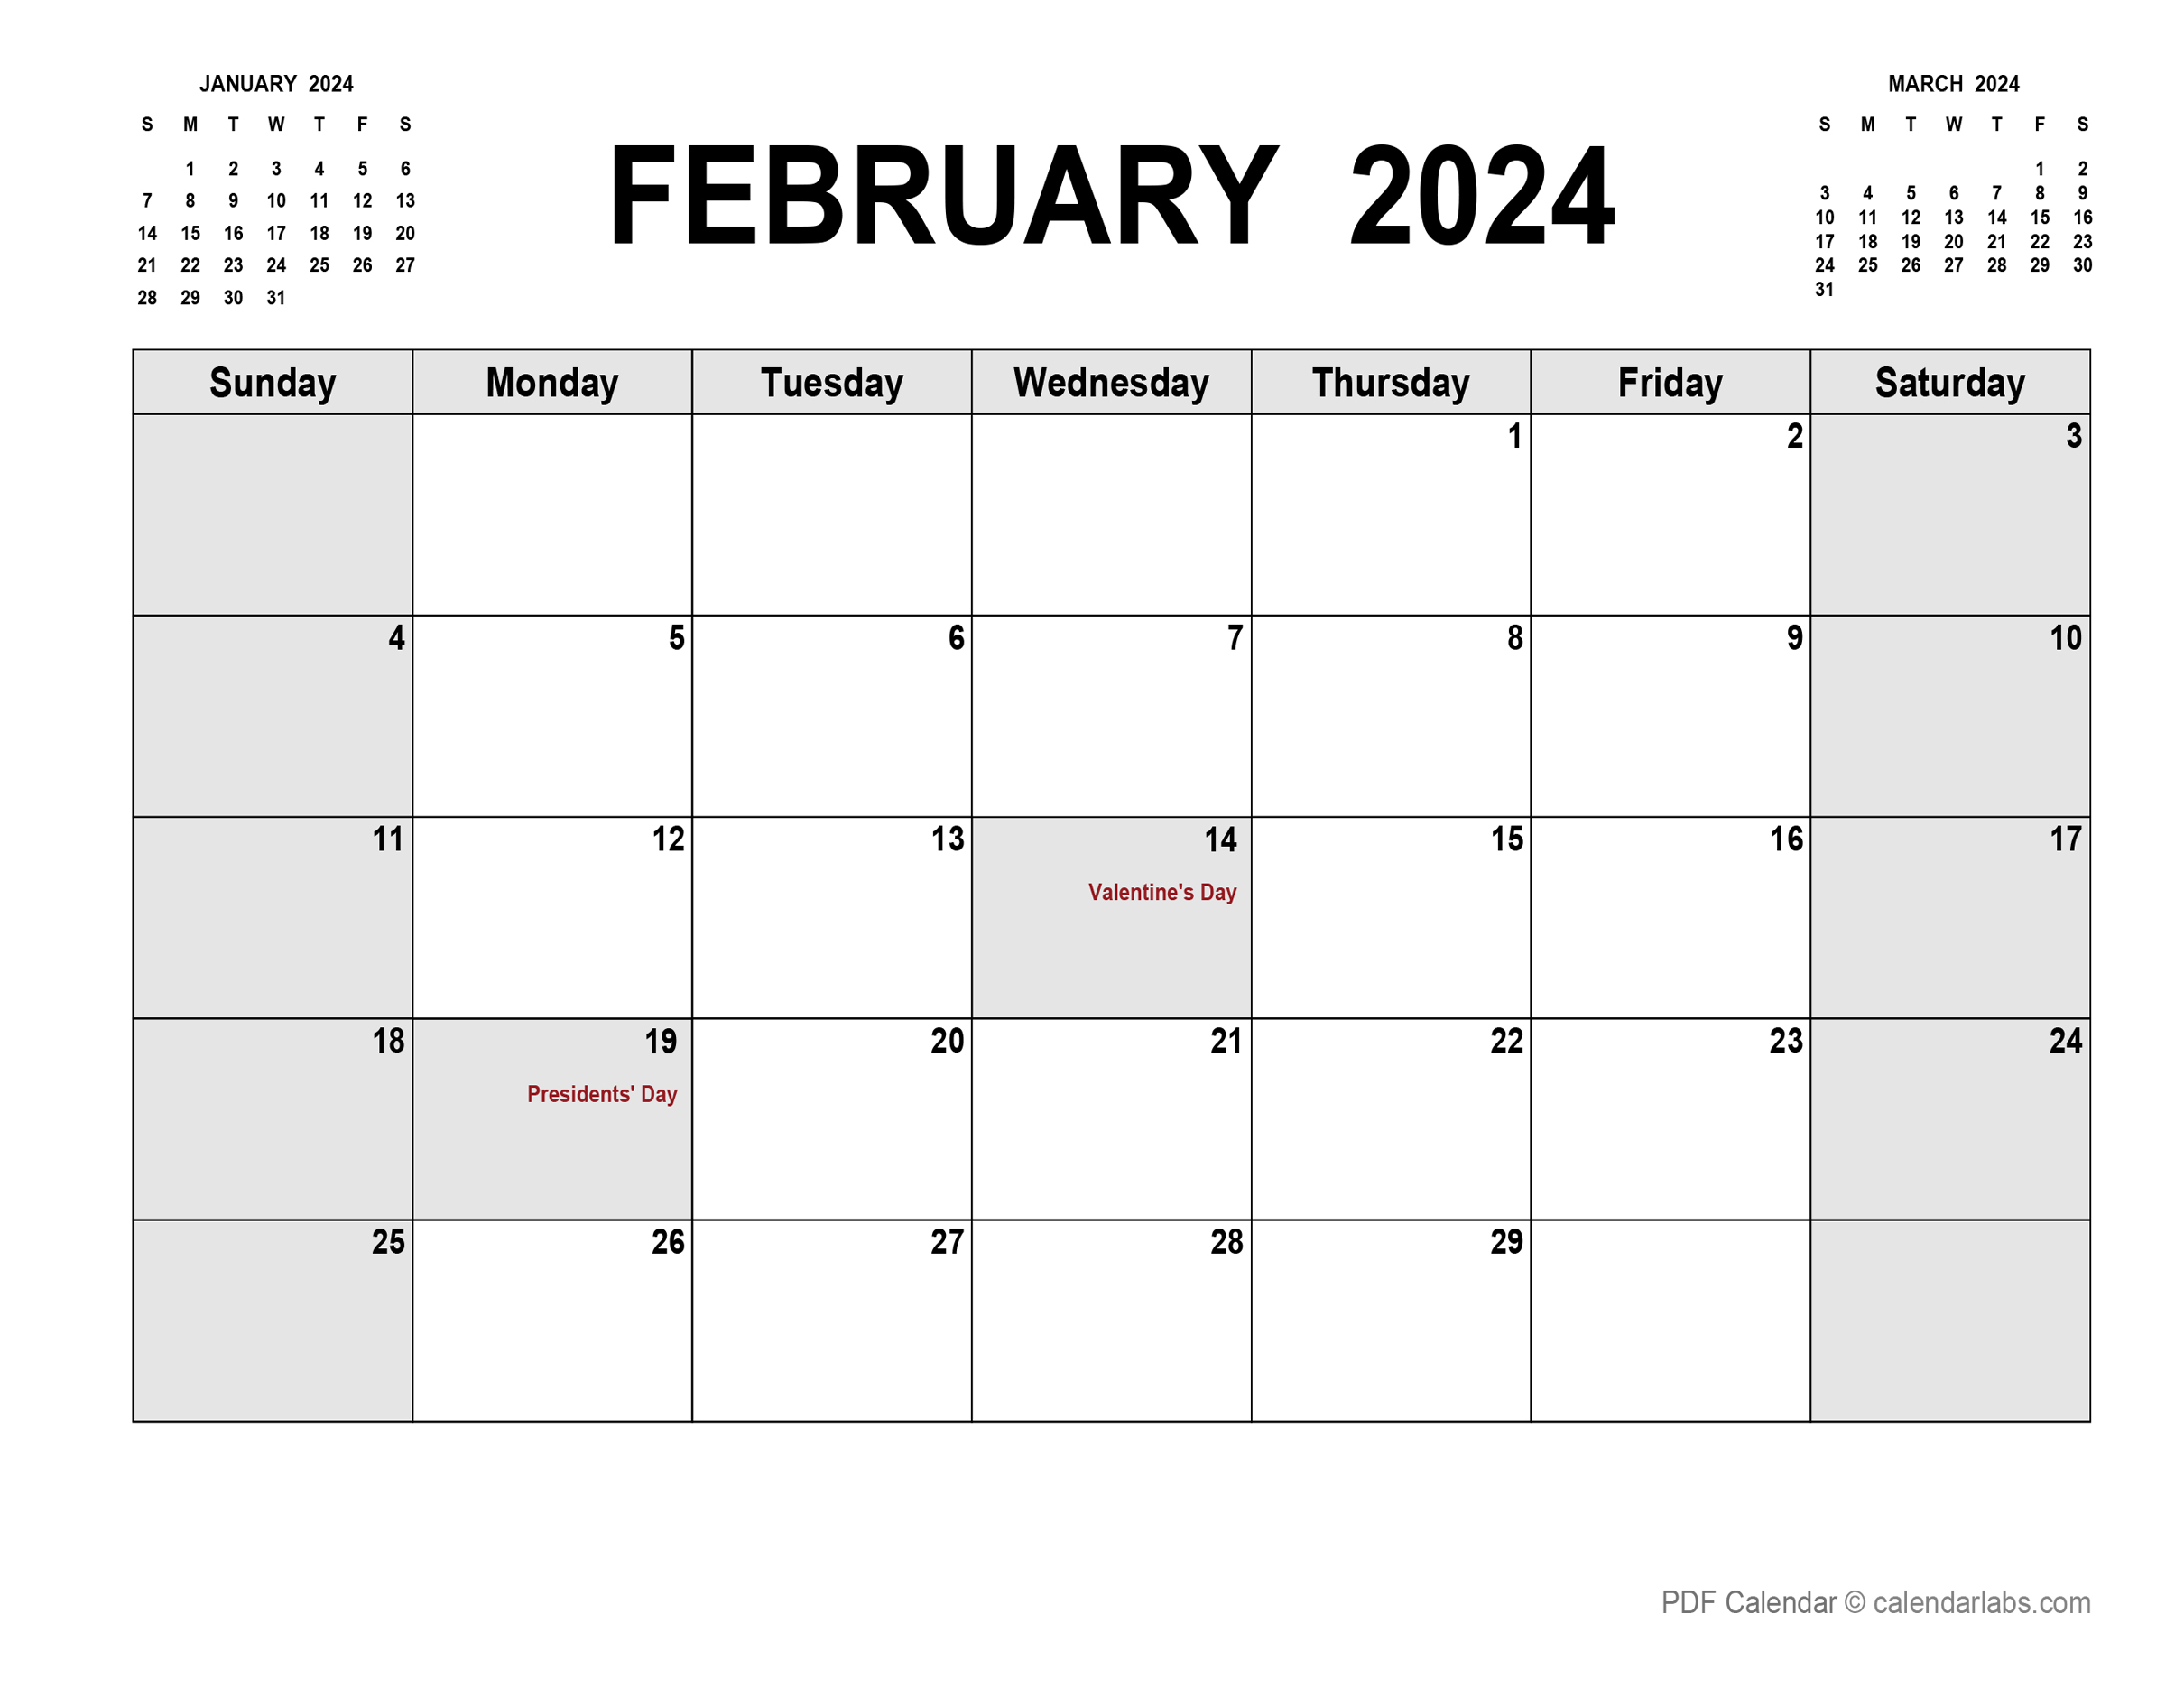 February 2024 Calendar Printable